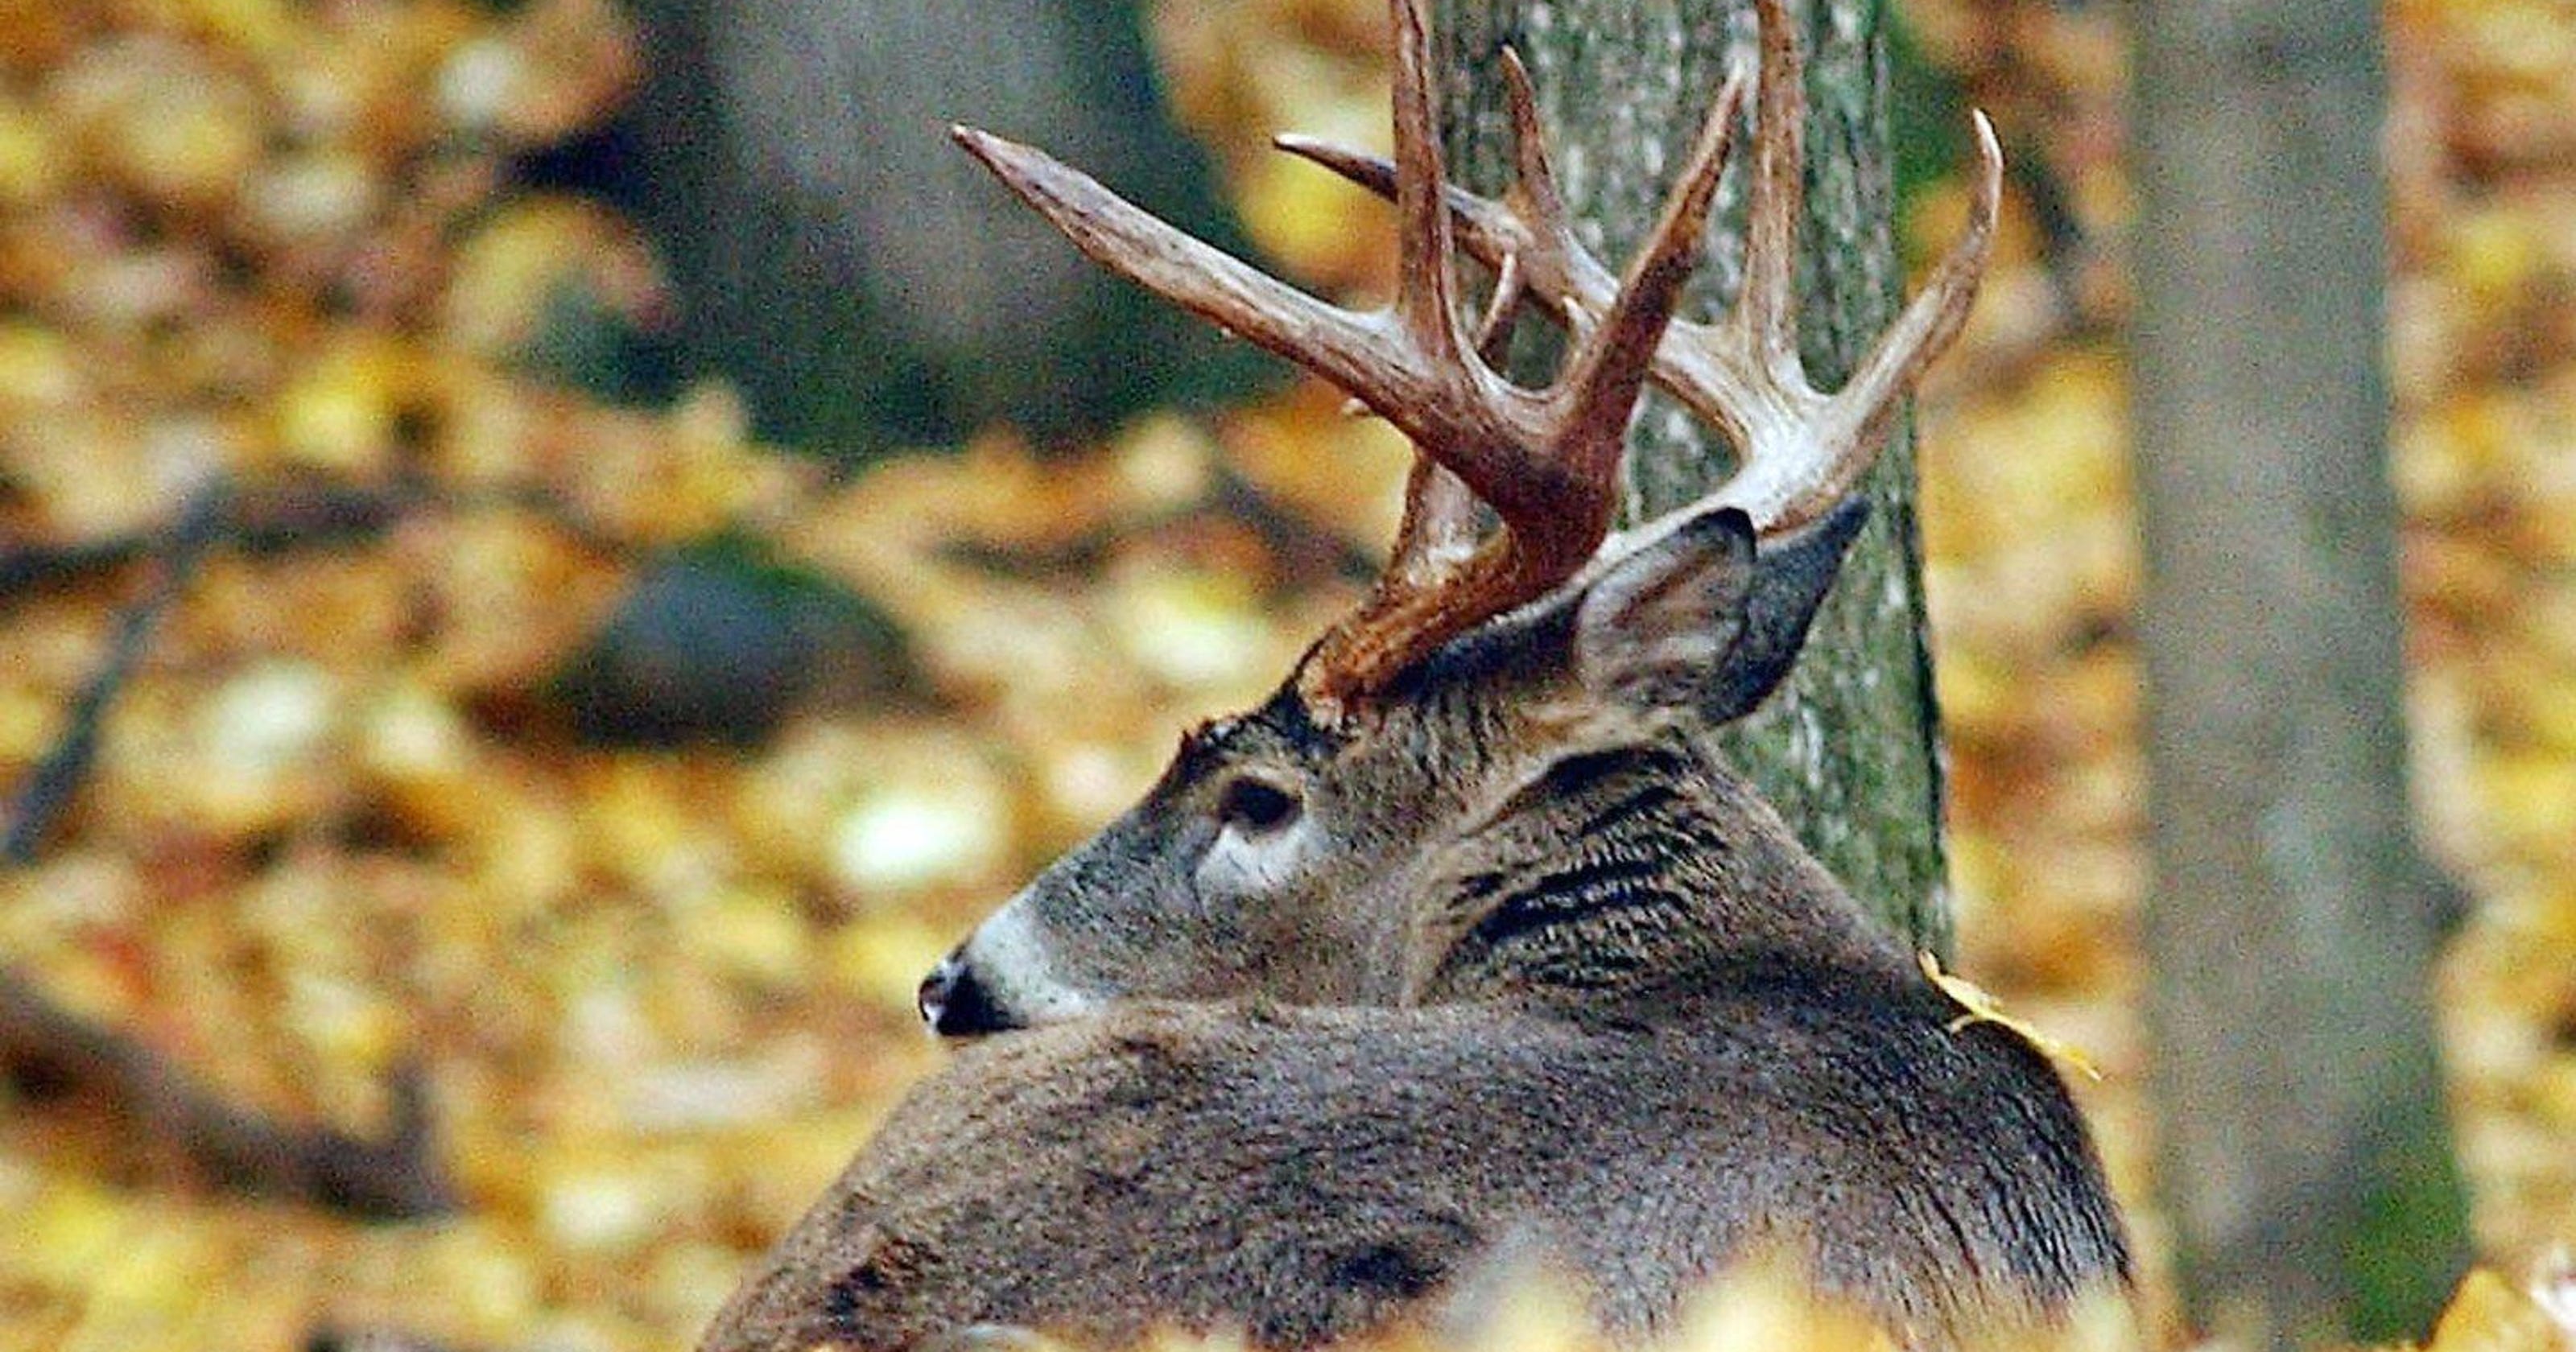 Fall is deer season in Michigan